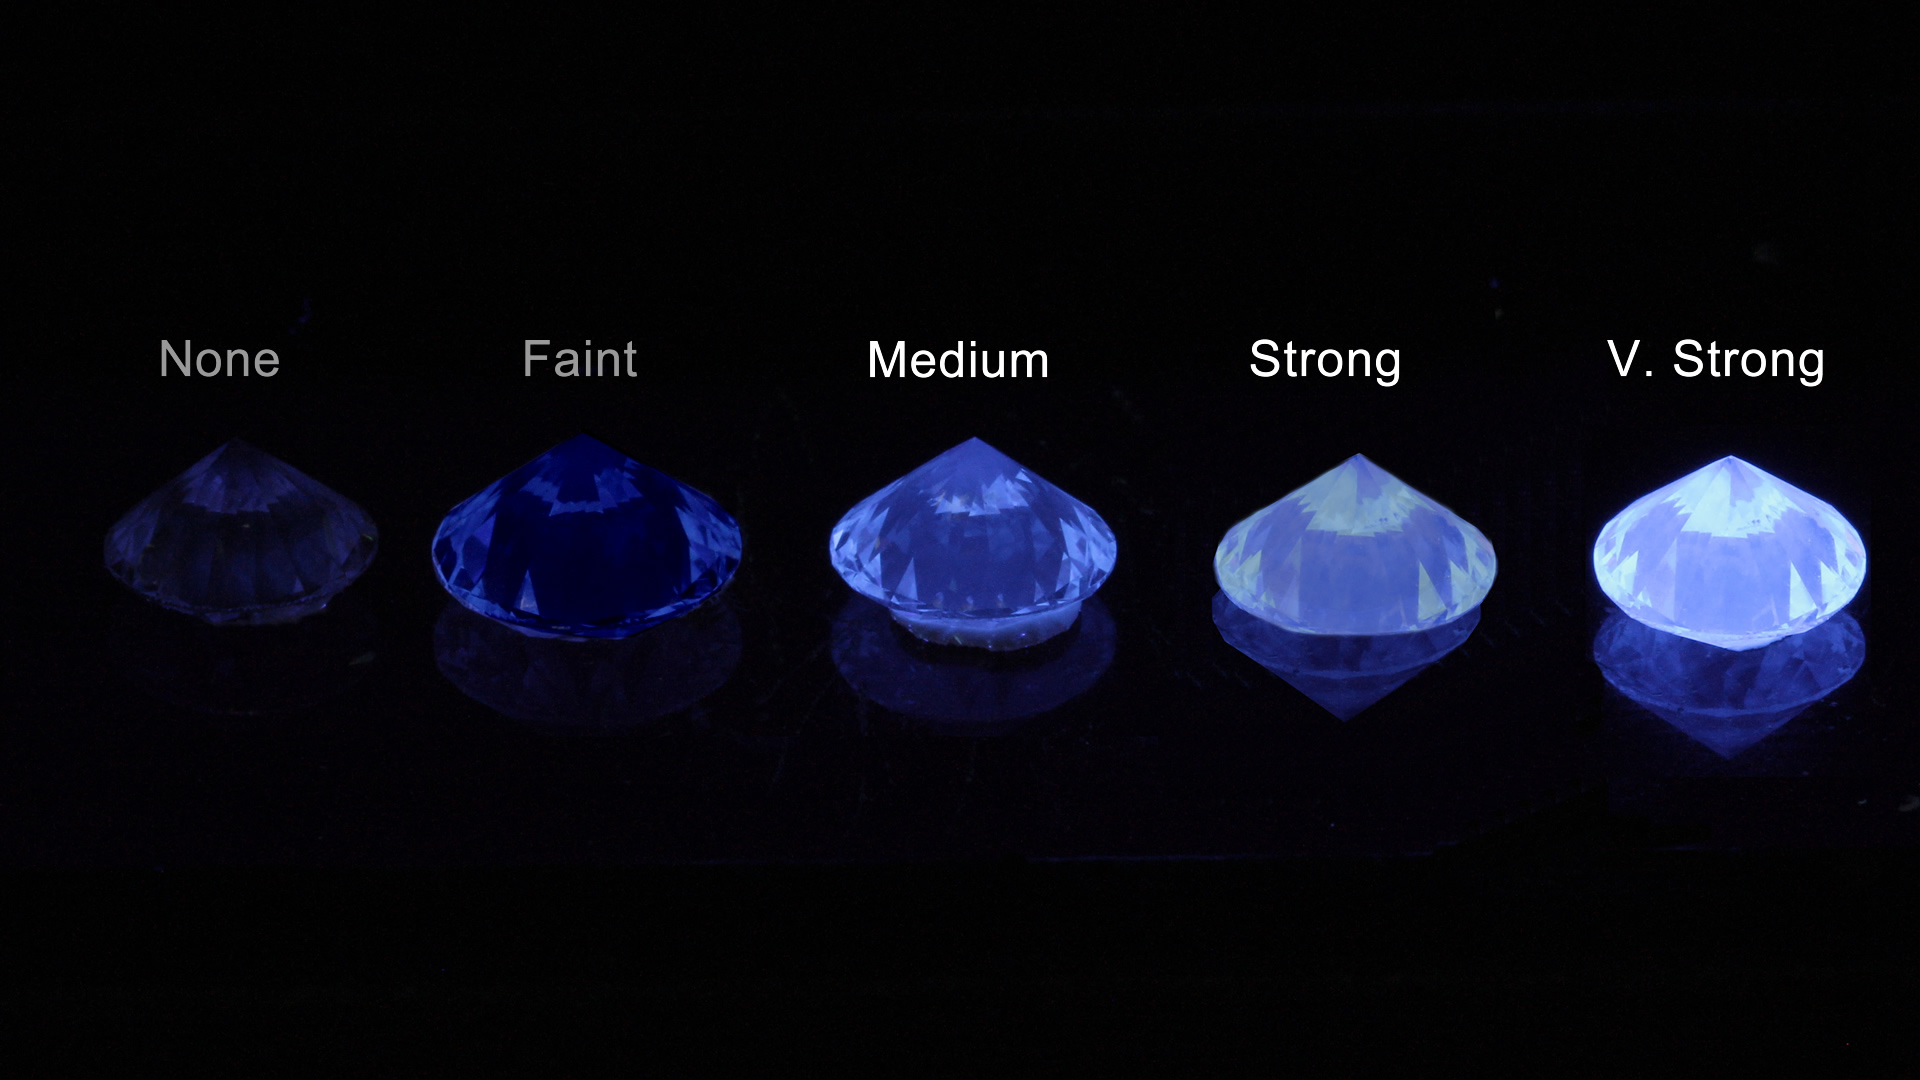 Diamond fluorescence, what is it?